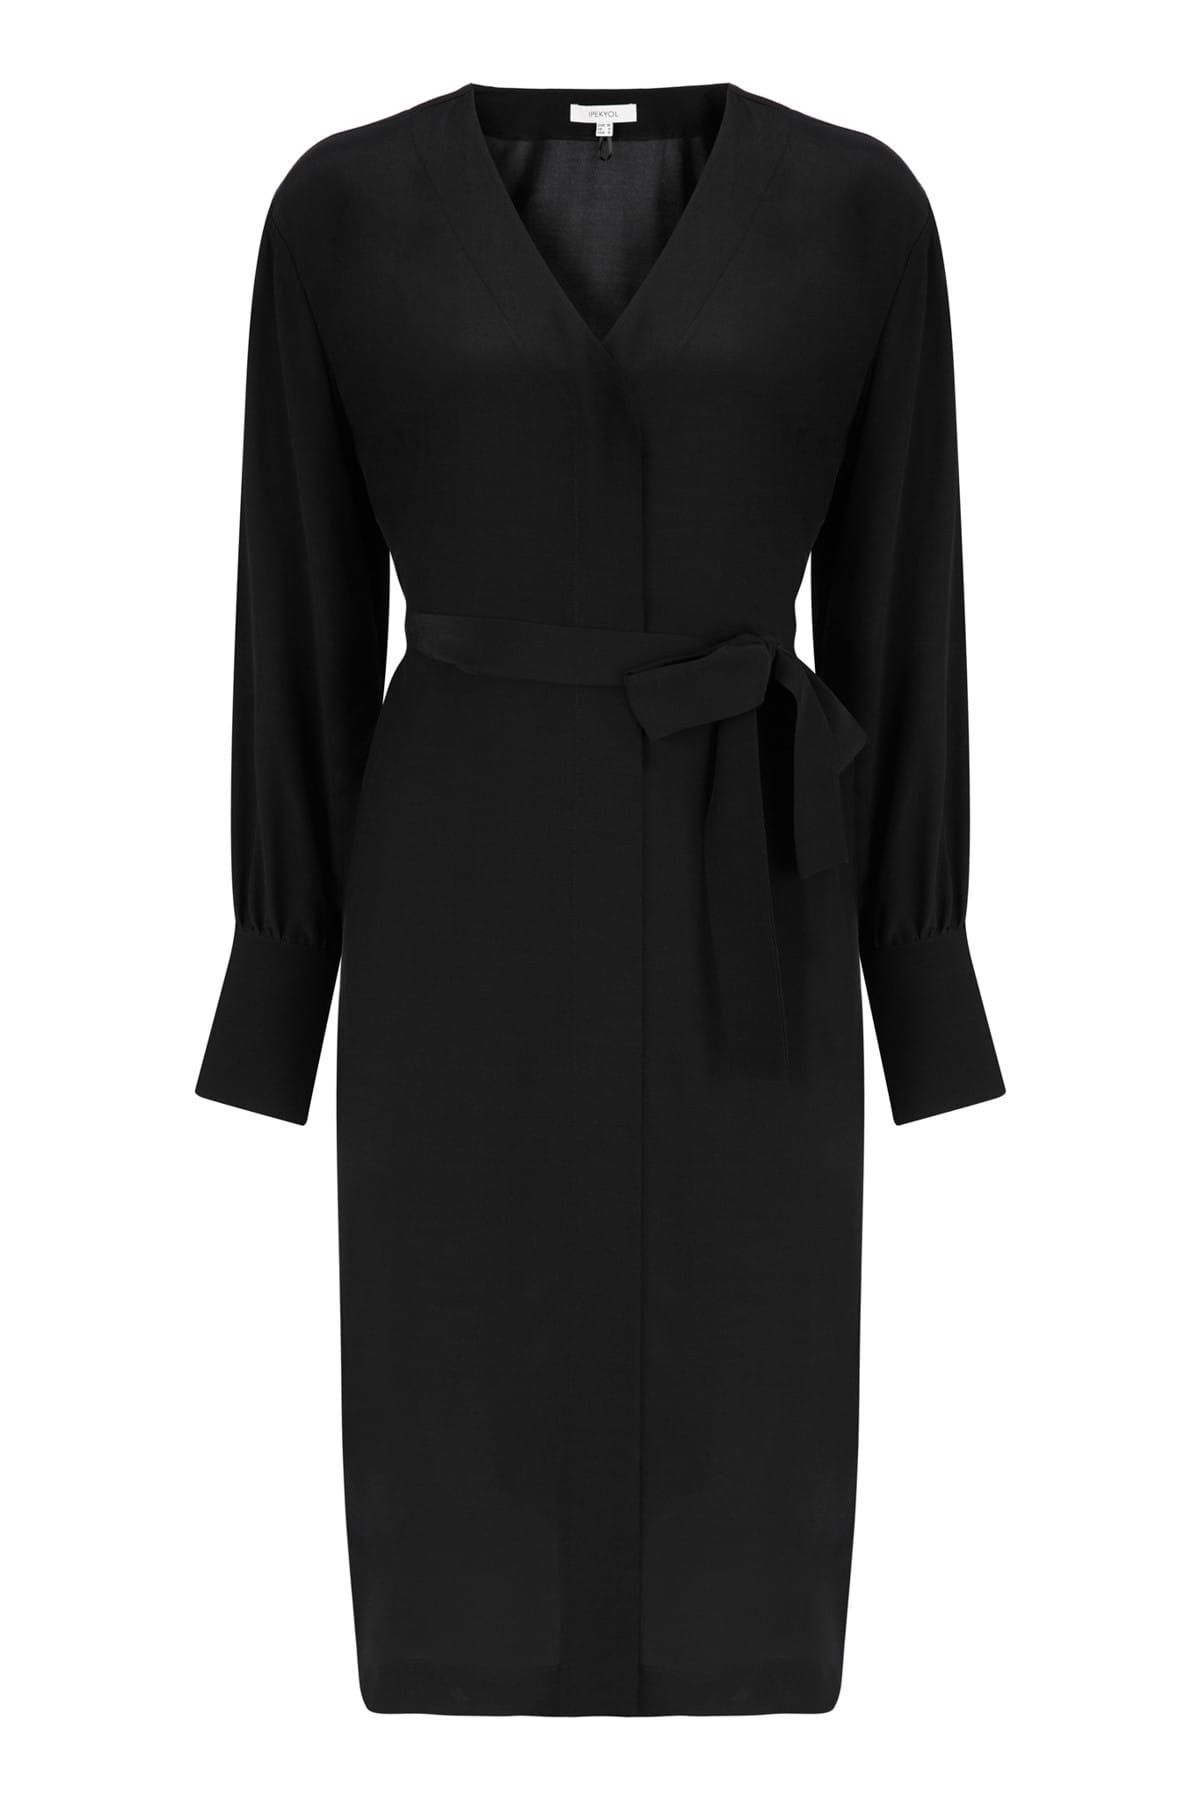 İpekyol Kadın Siyah Elbise IS1190002405